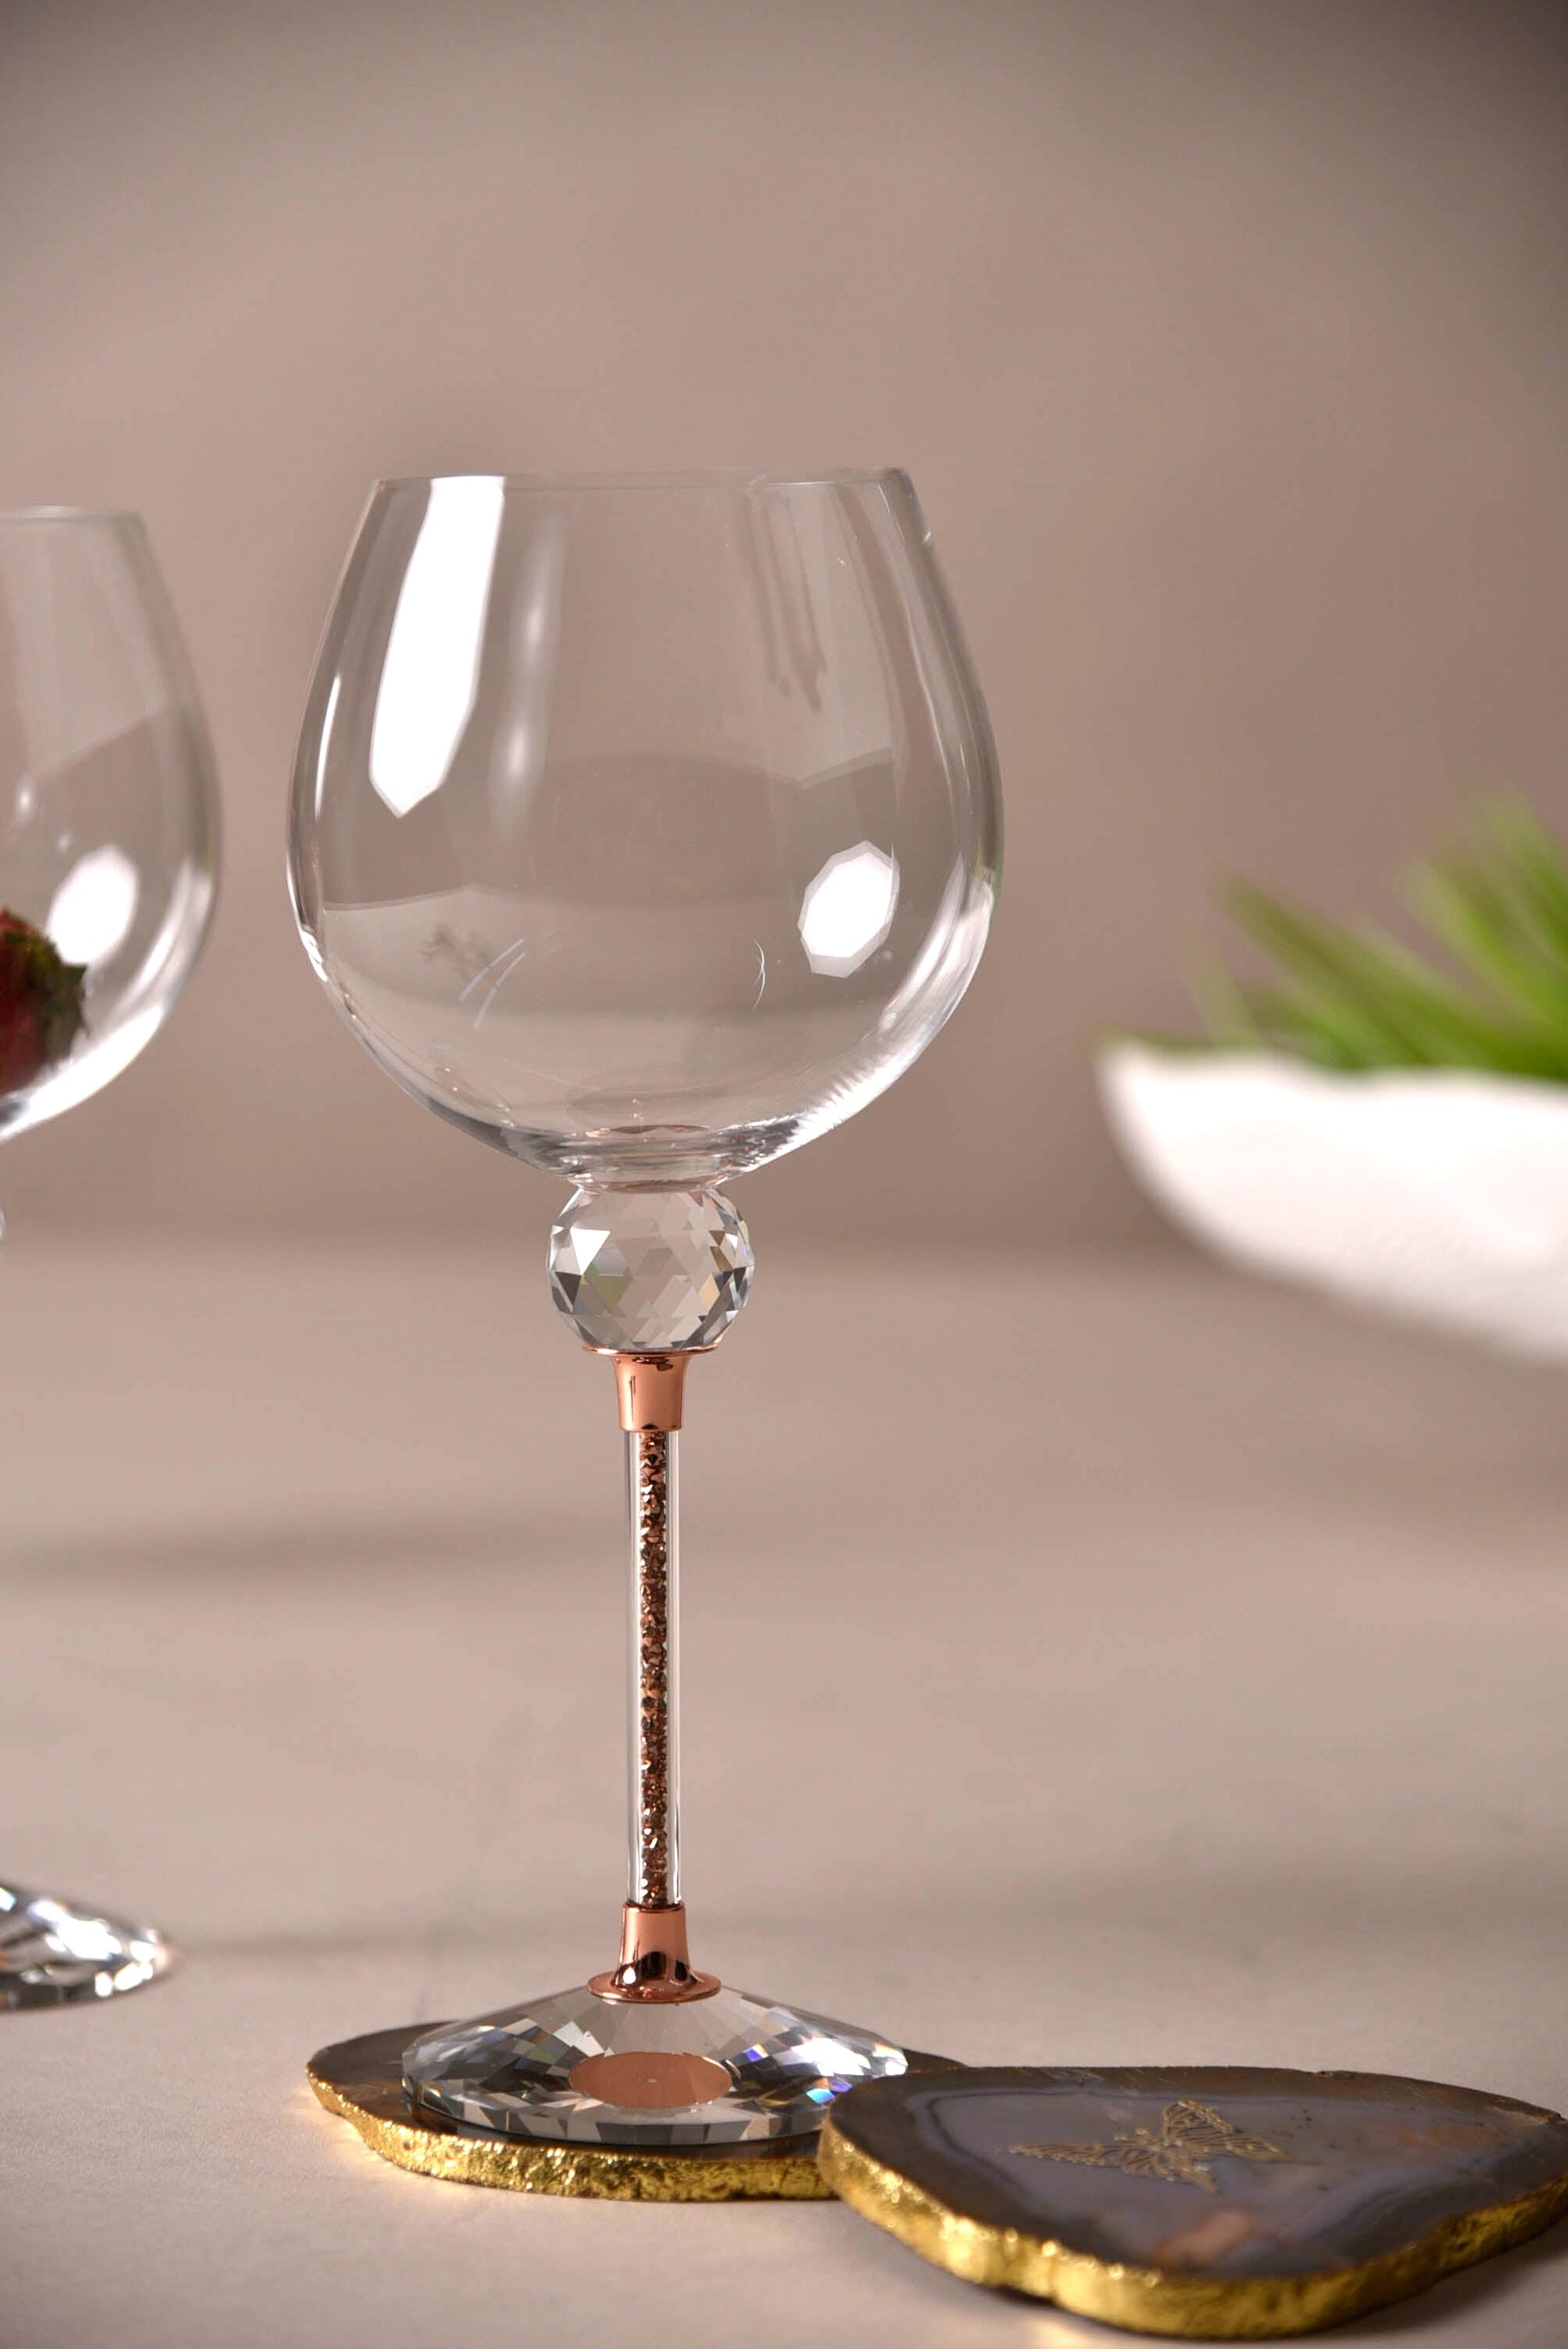 Caelus Rose Gold Crystal Wine Glasses (Set of 4)